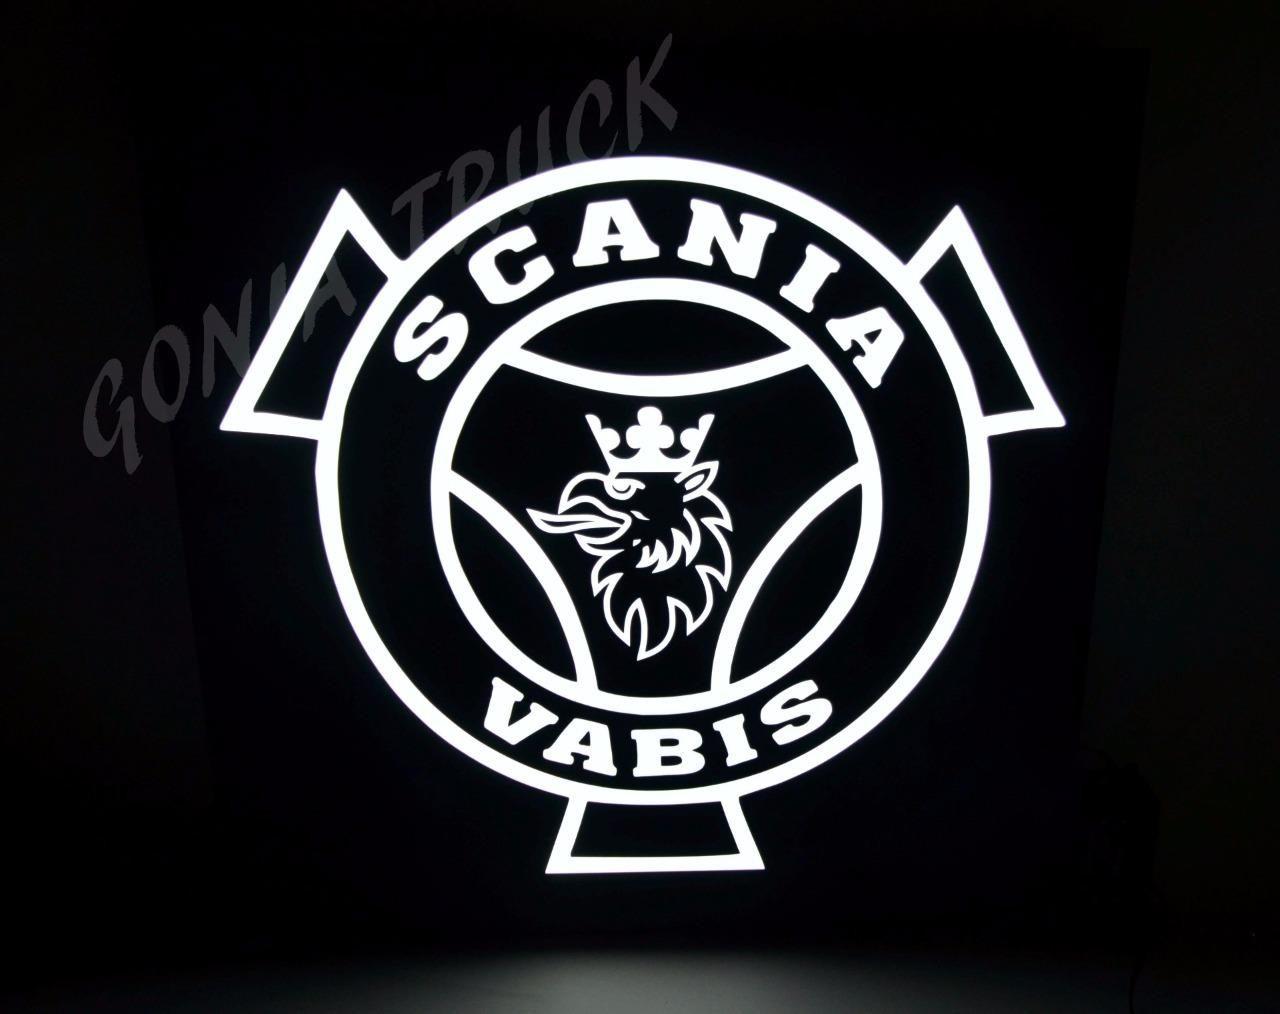 Scania Logo HD Wallpaper. All New Car Release Date 2019 2020